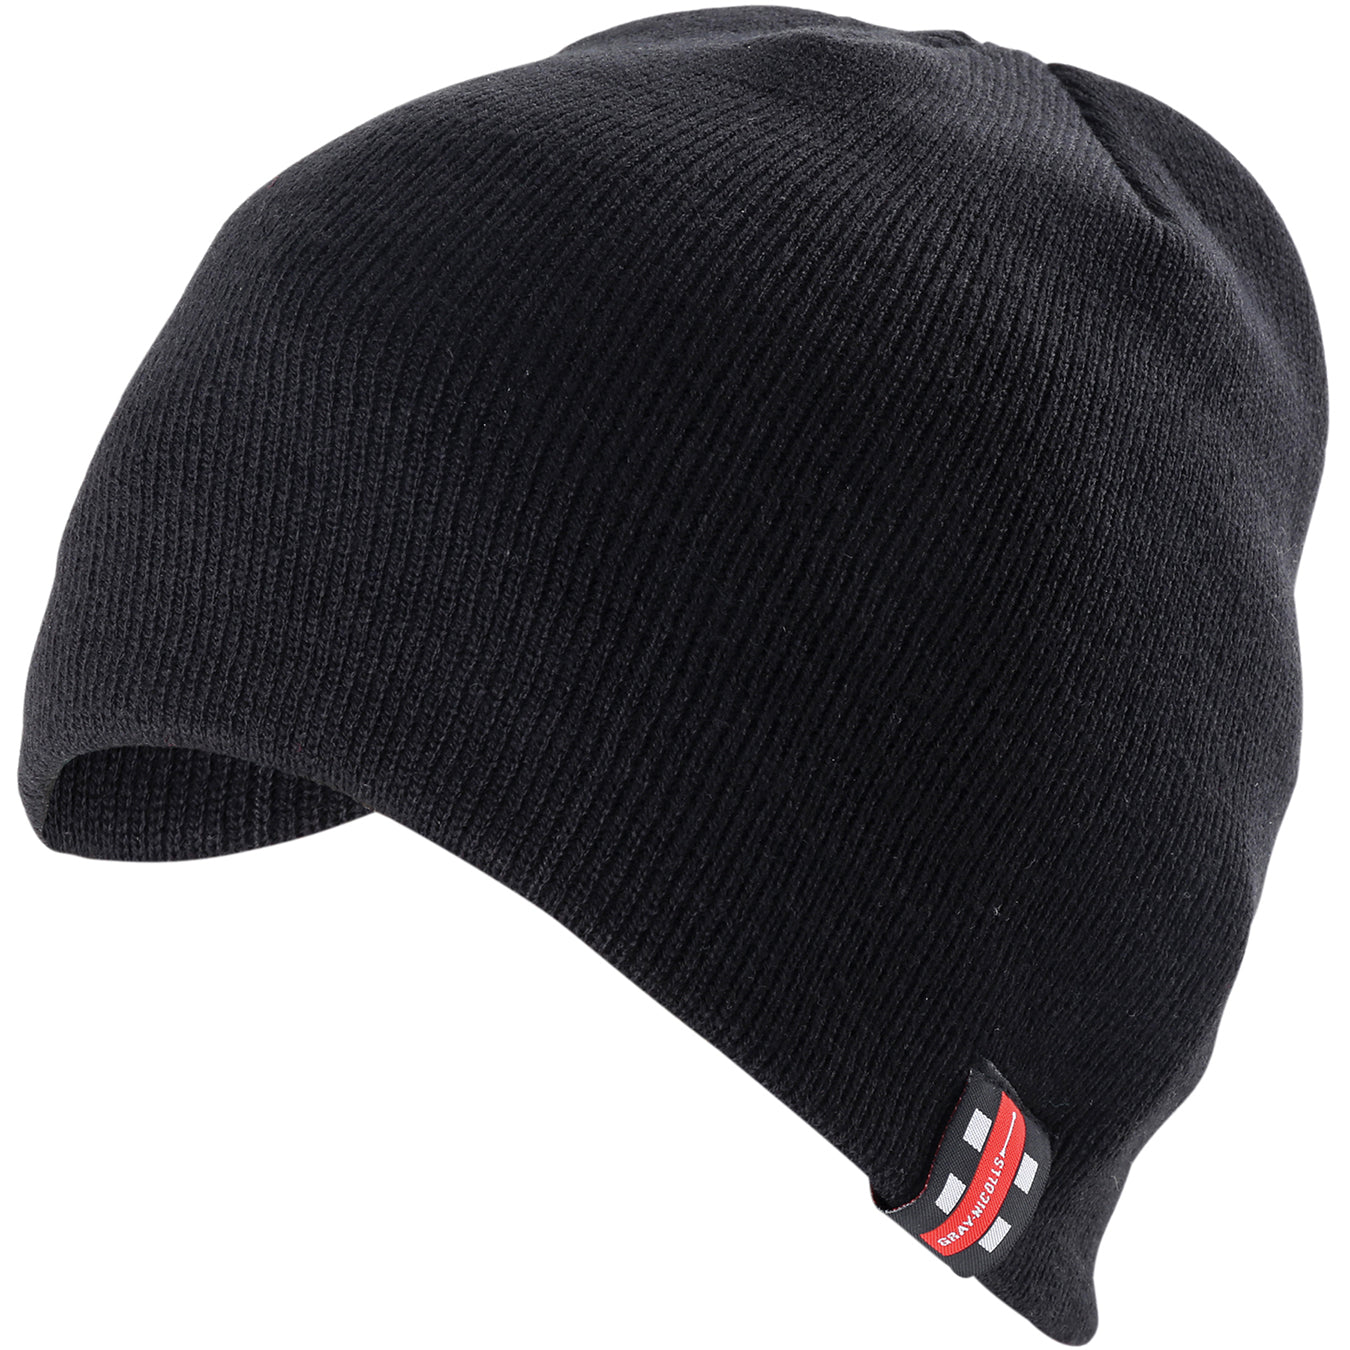 CCIE15Headwear Beanie Hat Black